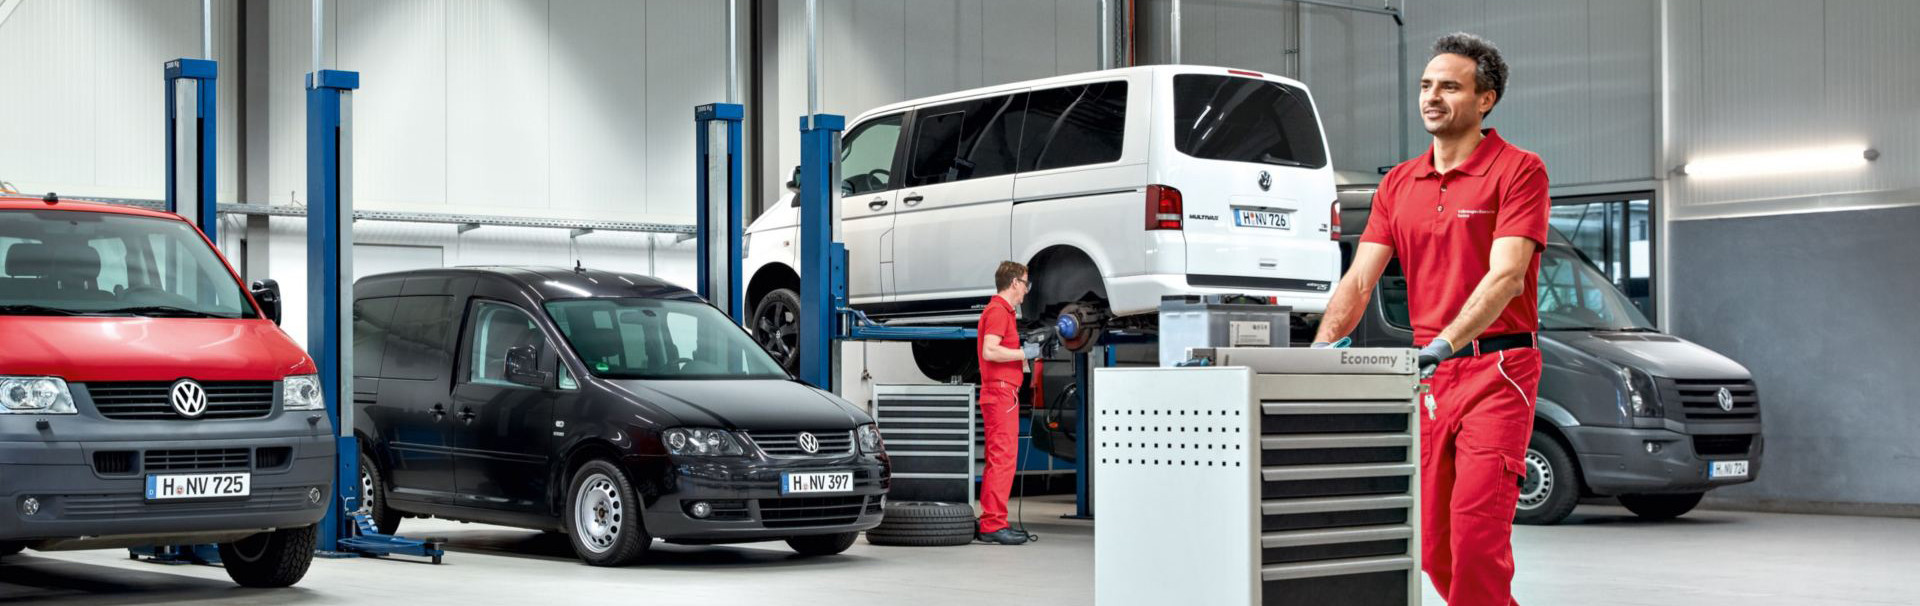 Volkswagen Economy Service